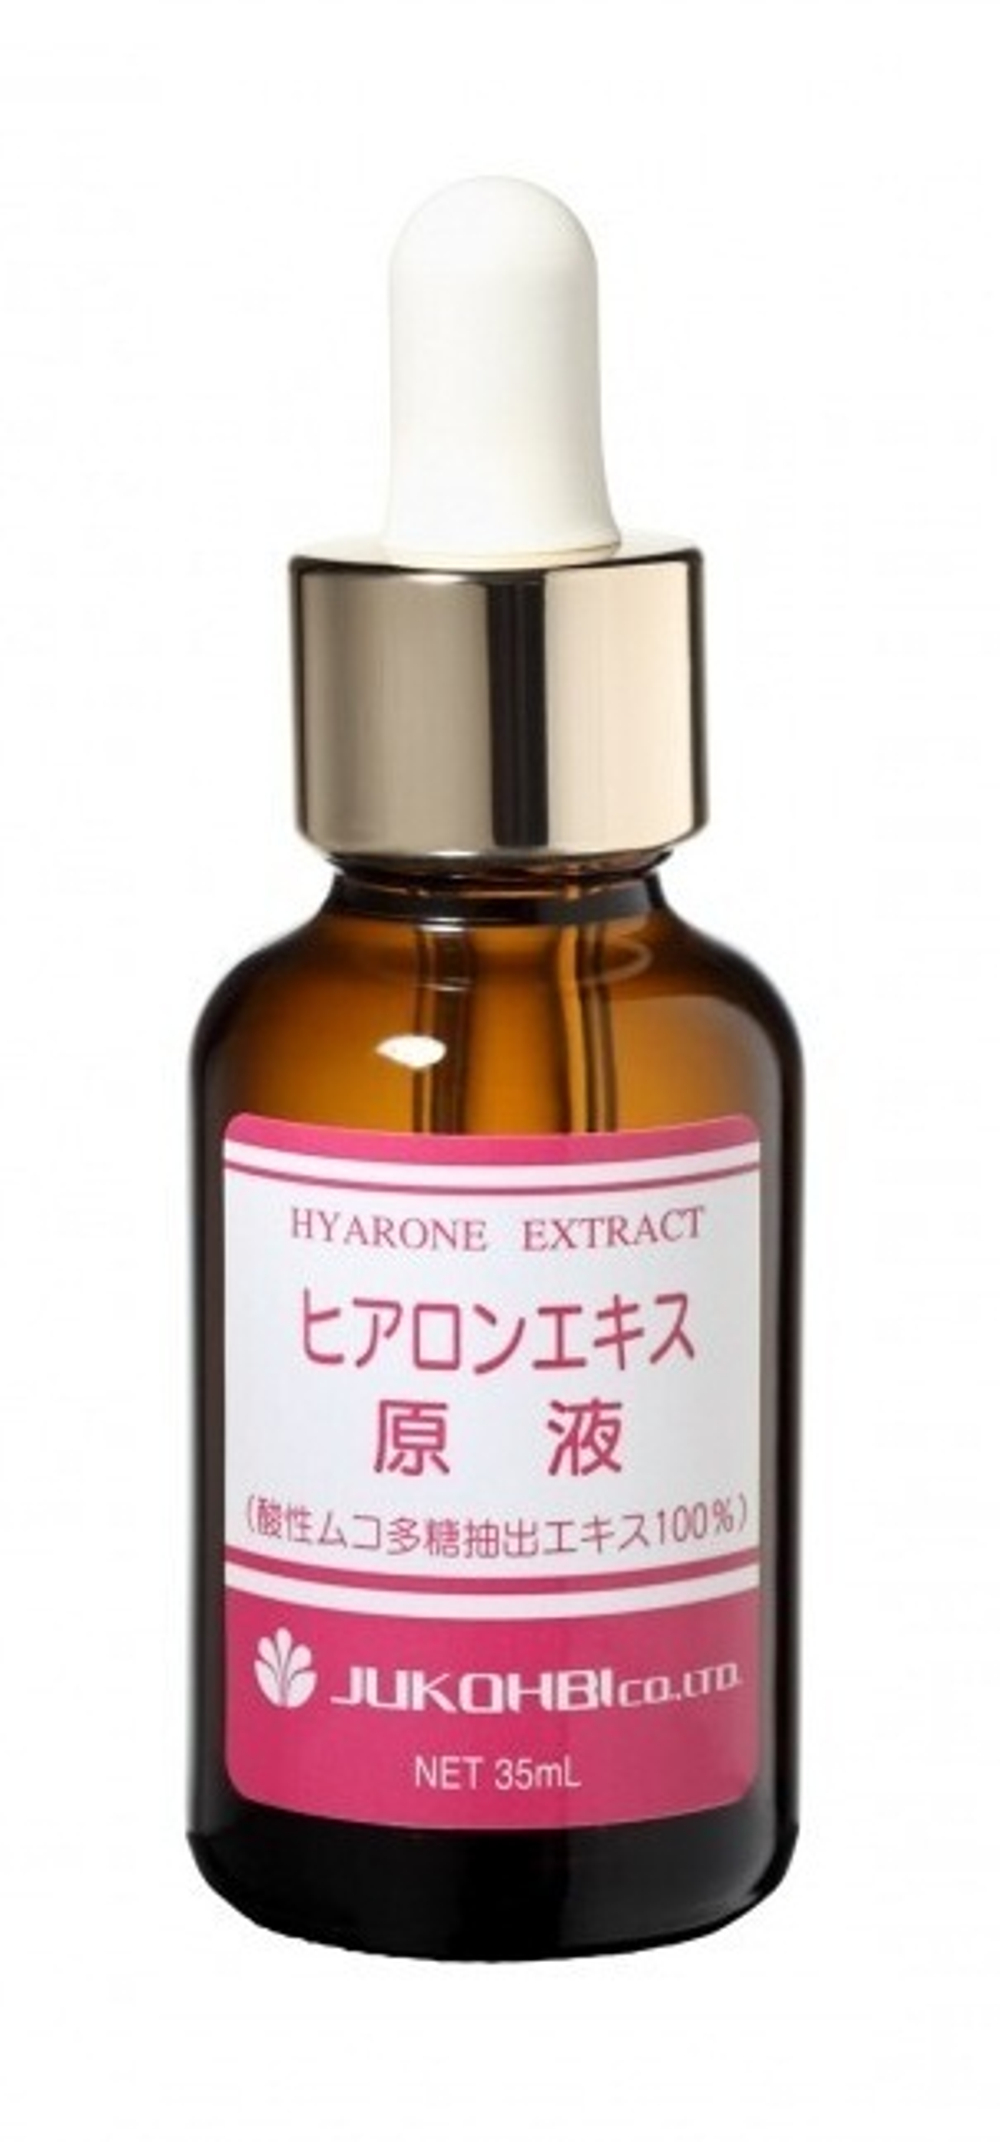 JUKOHBI Сыворотка с экстрактом хиарона 100%  Hyarone Extract 35 мл